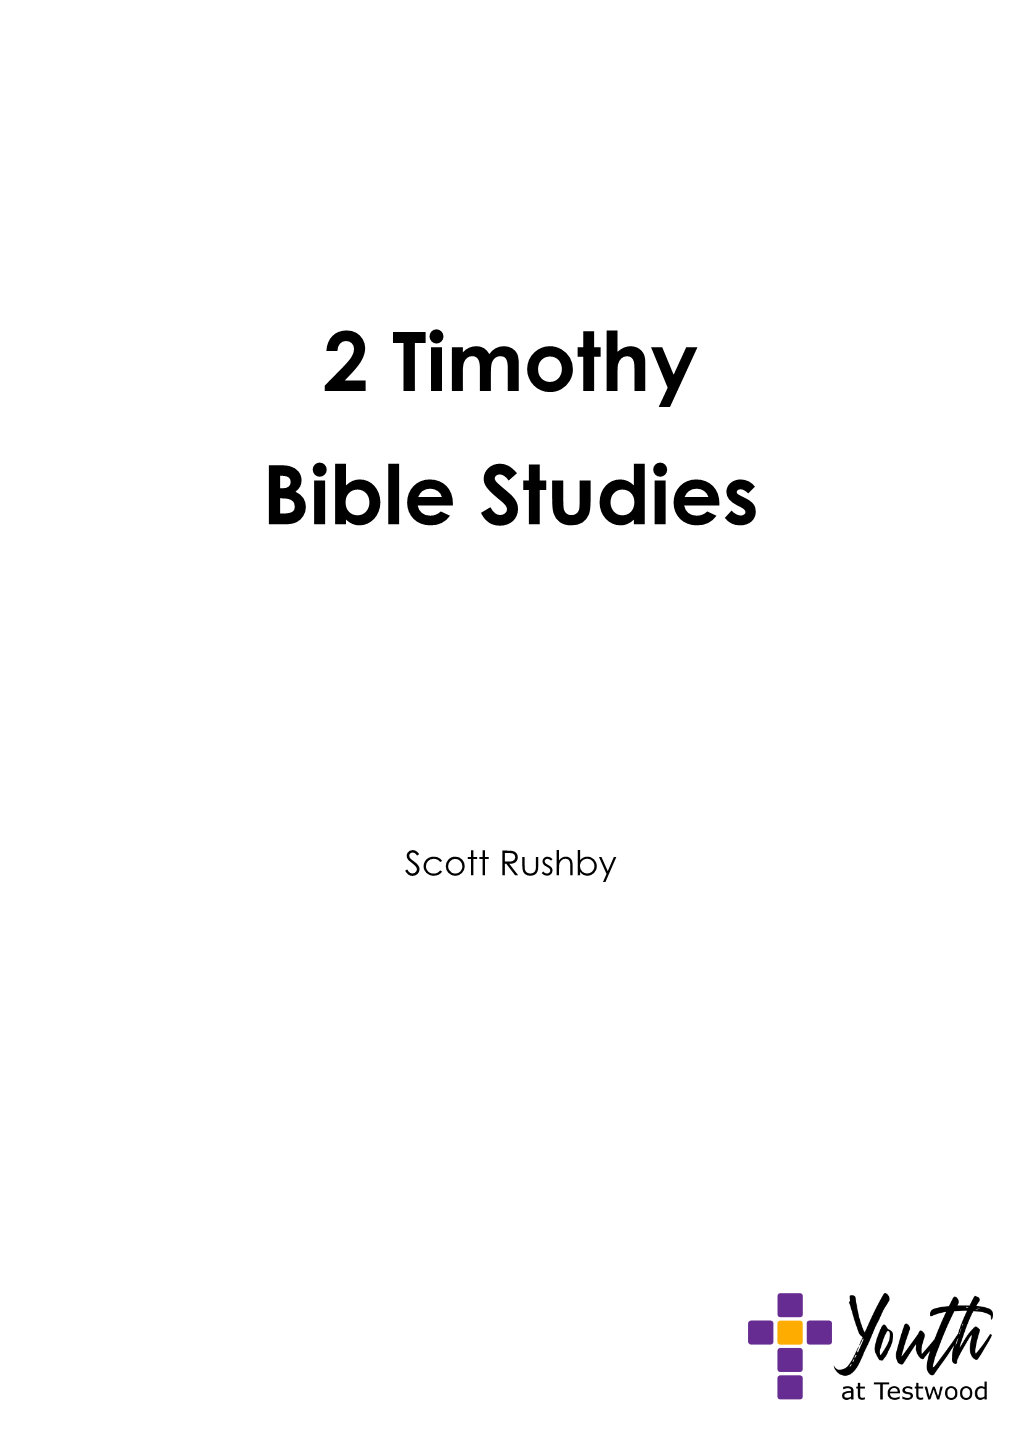 2 Timothy Bible Studies